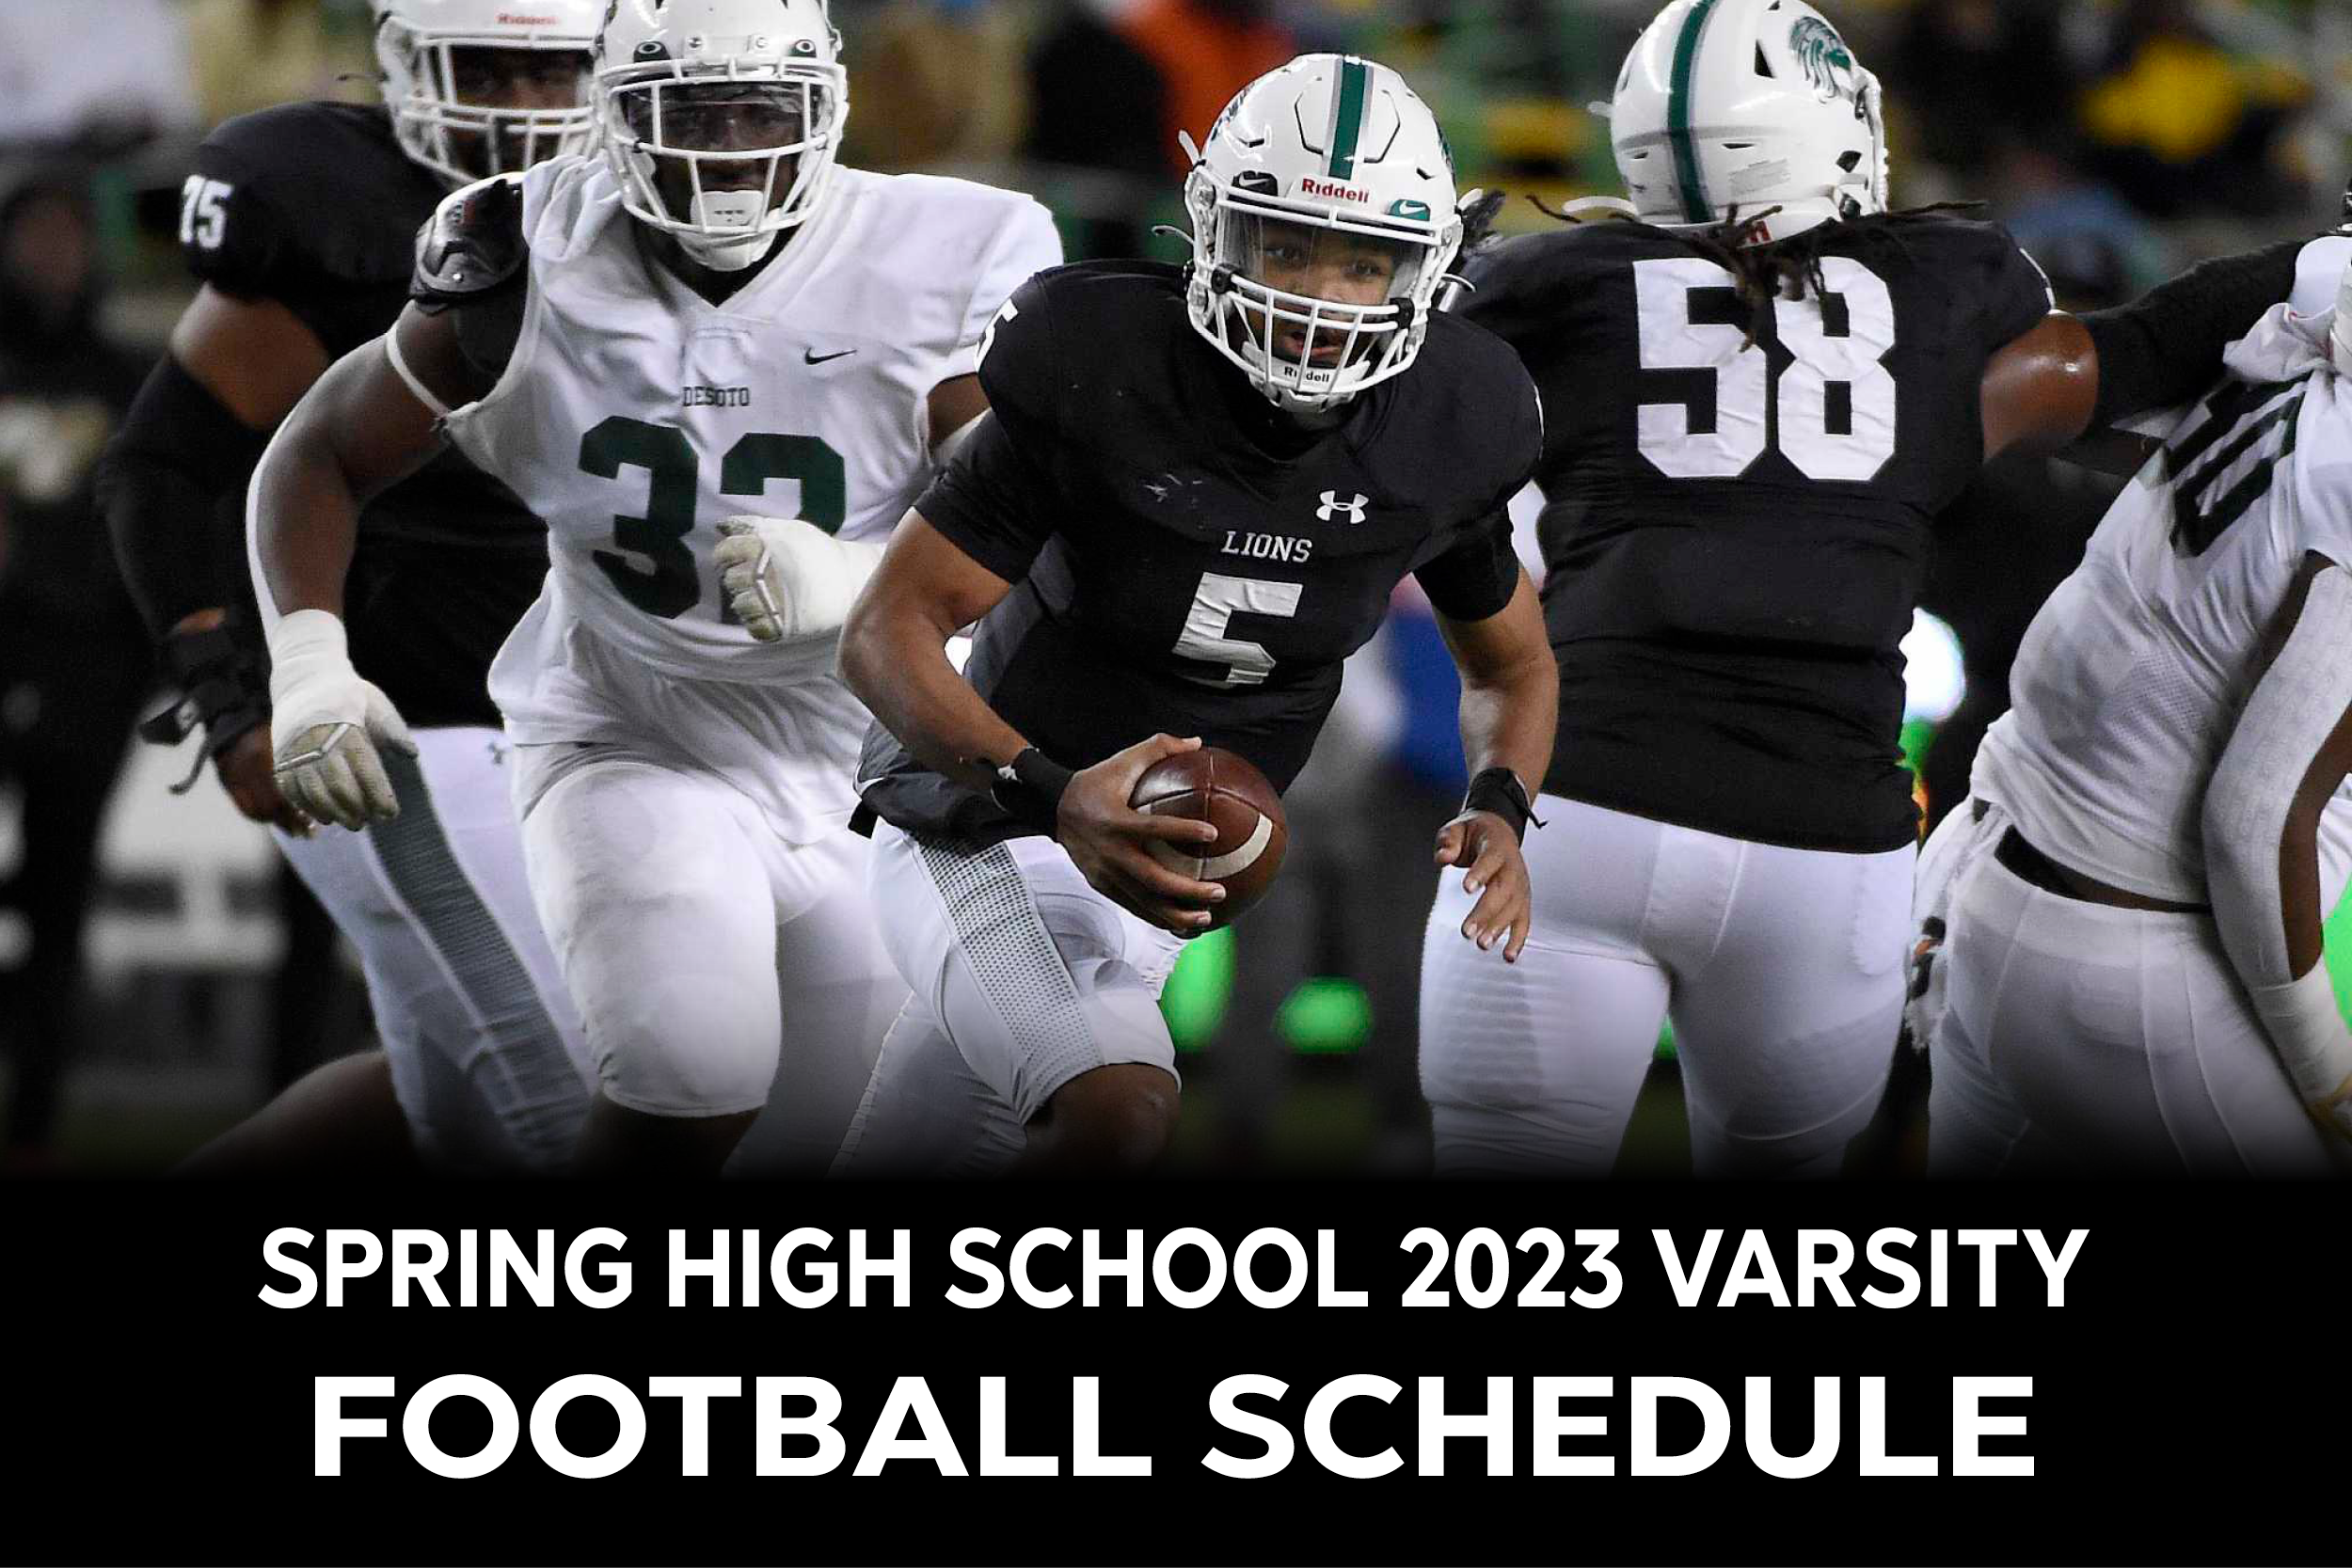 Spring High School 2023 Football Schedule